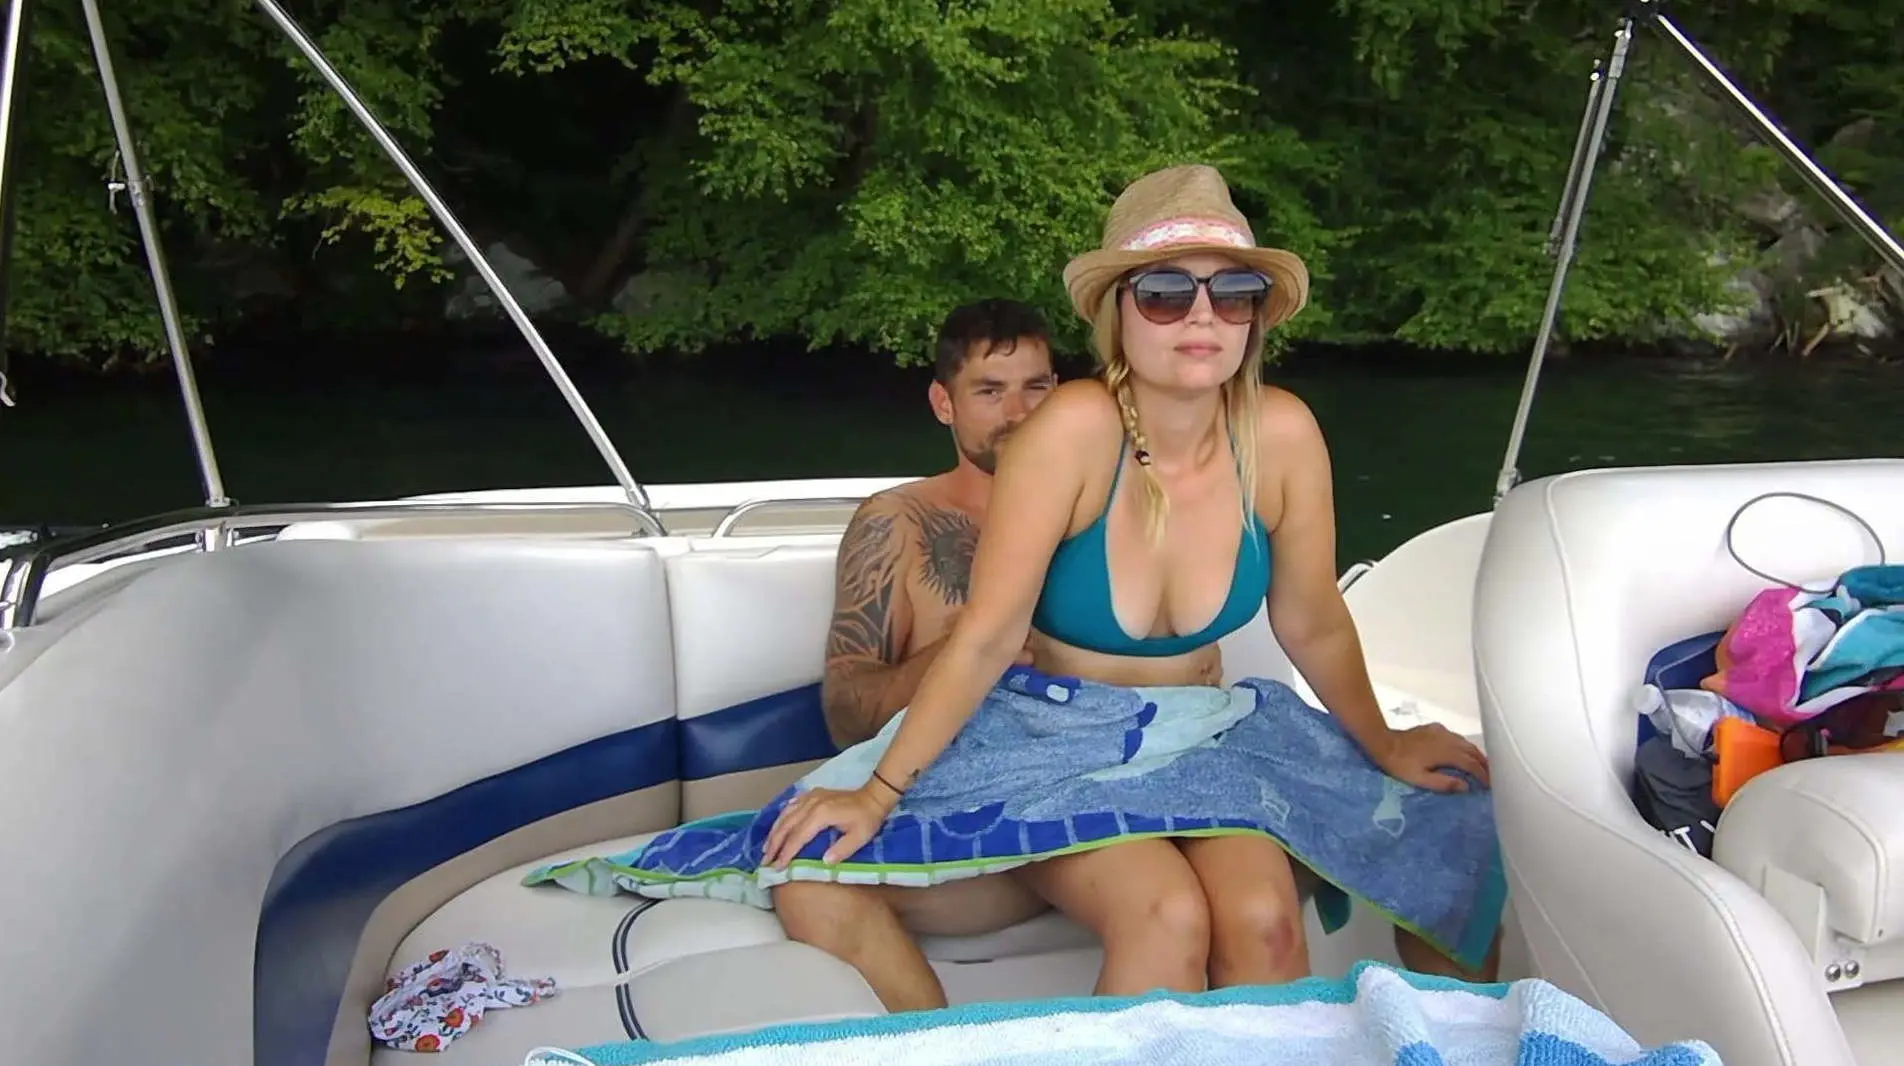 Some fun with public sex on our boat - Sunporno